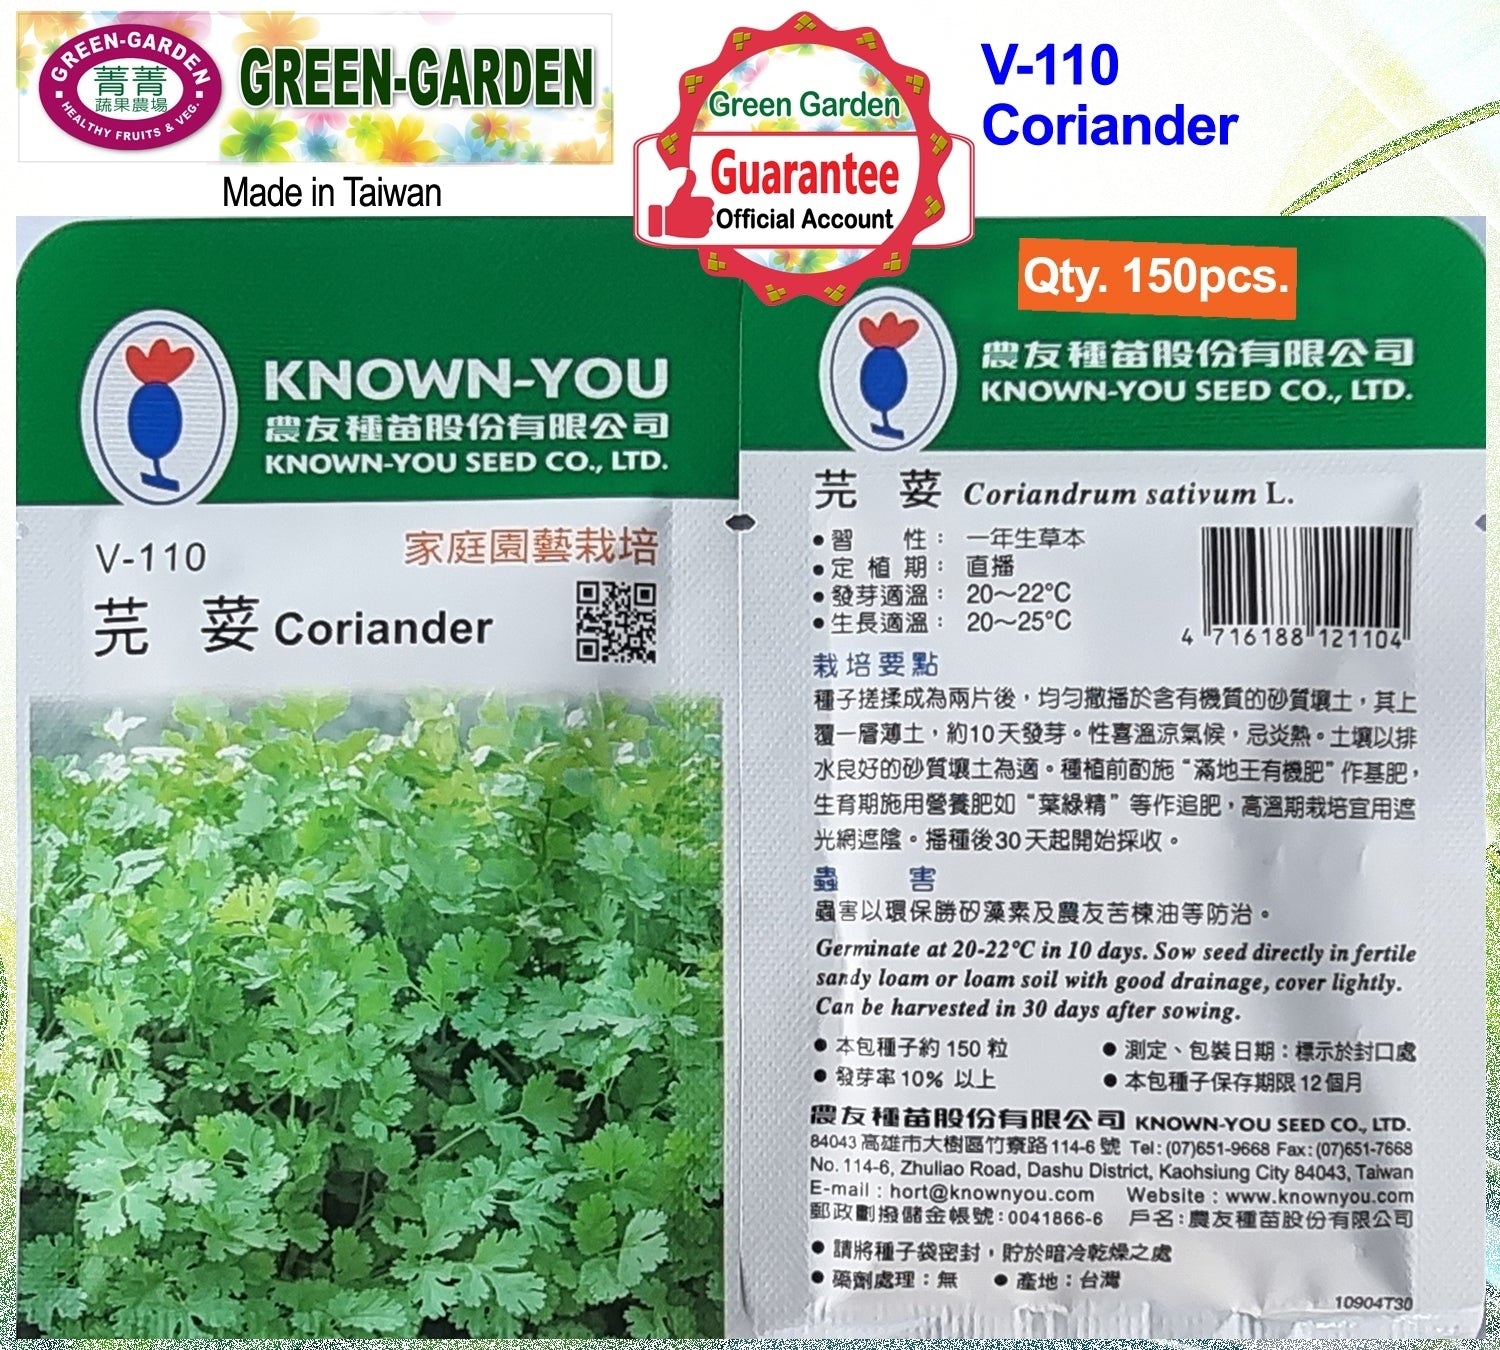 Known You Vegetable Seeds (V-110 Coriander)